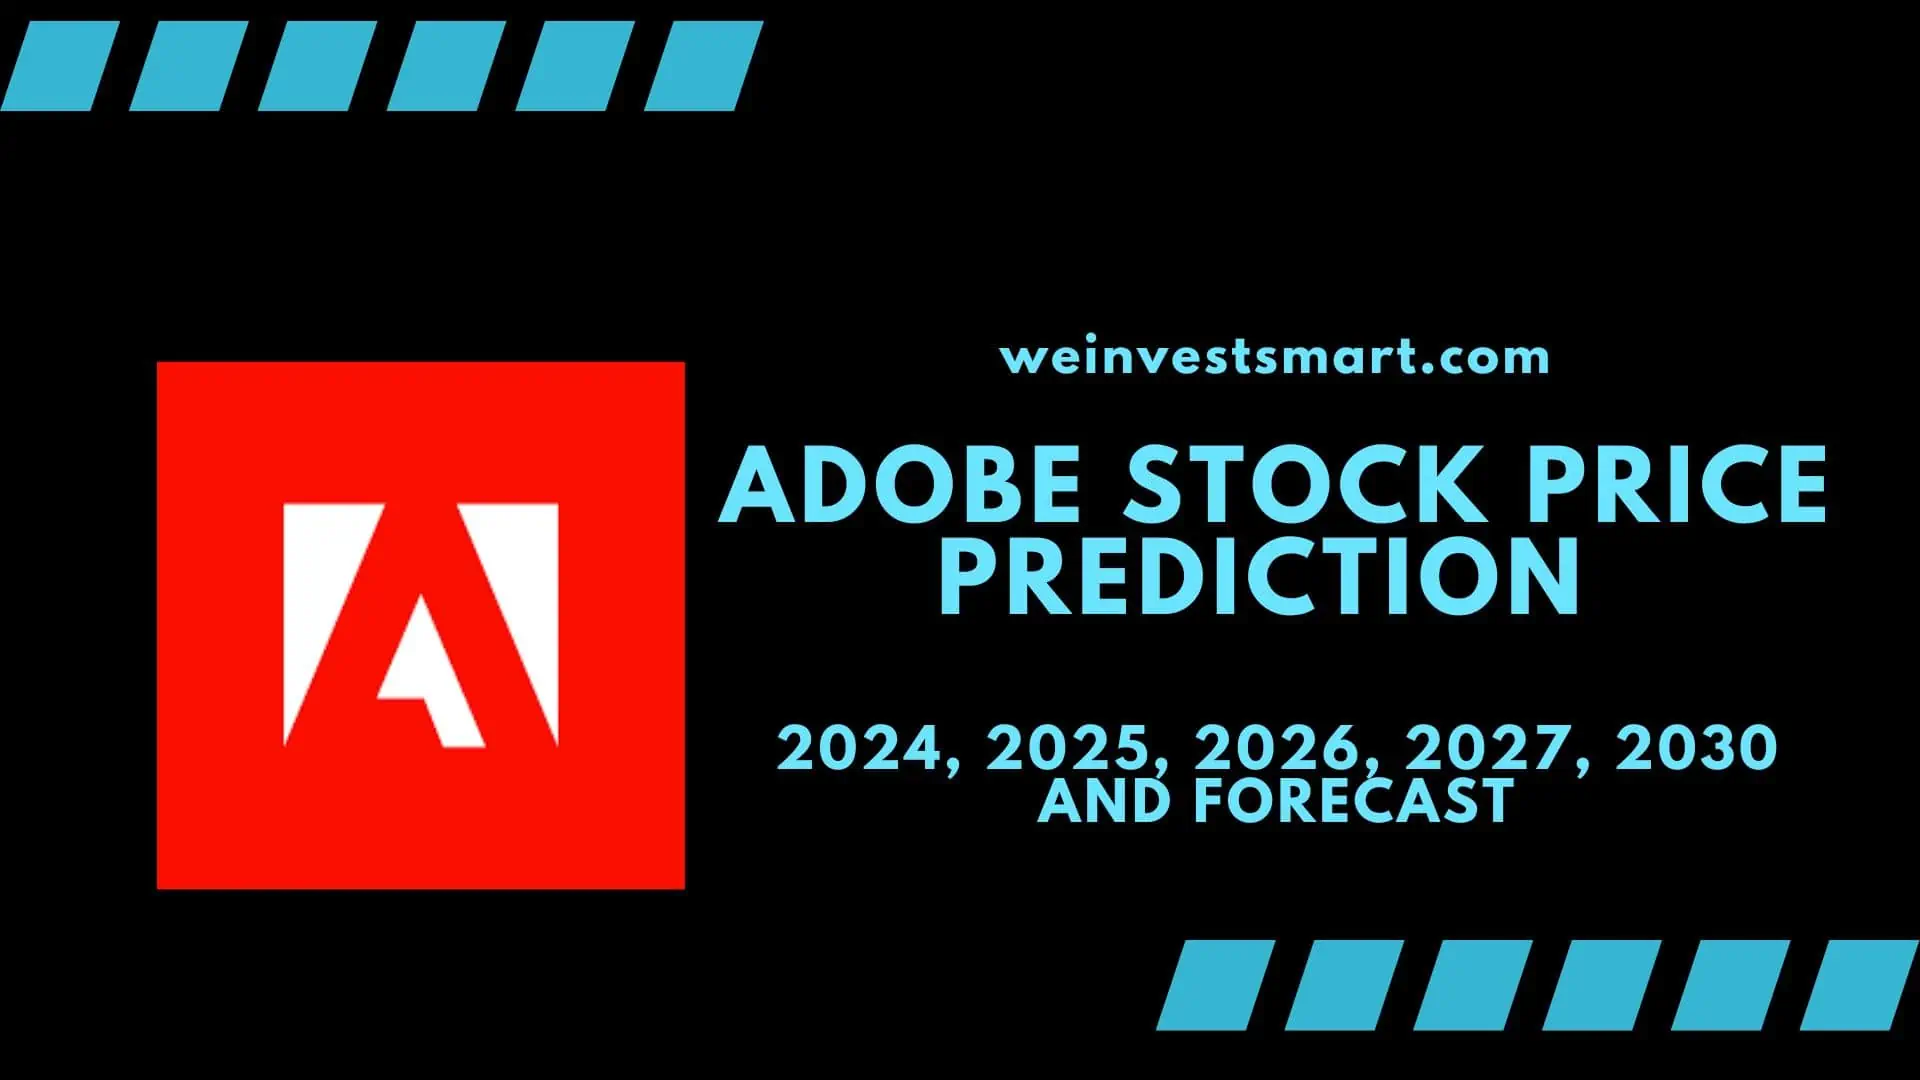 Adobe Stock Price Prediction 2024, 2025, 2026, 2027, 2030 and Forecast